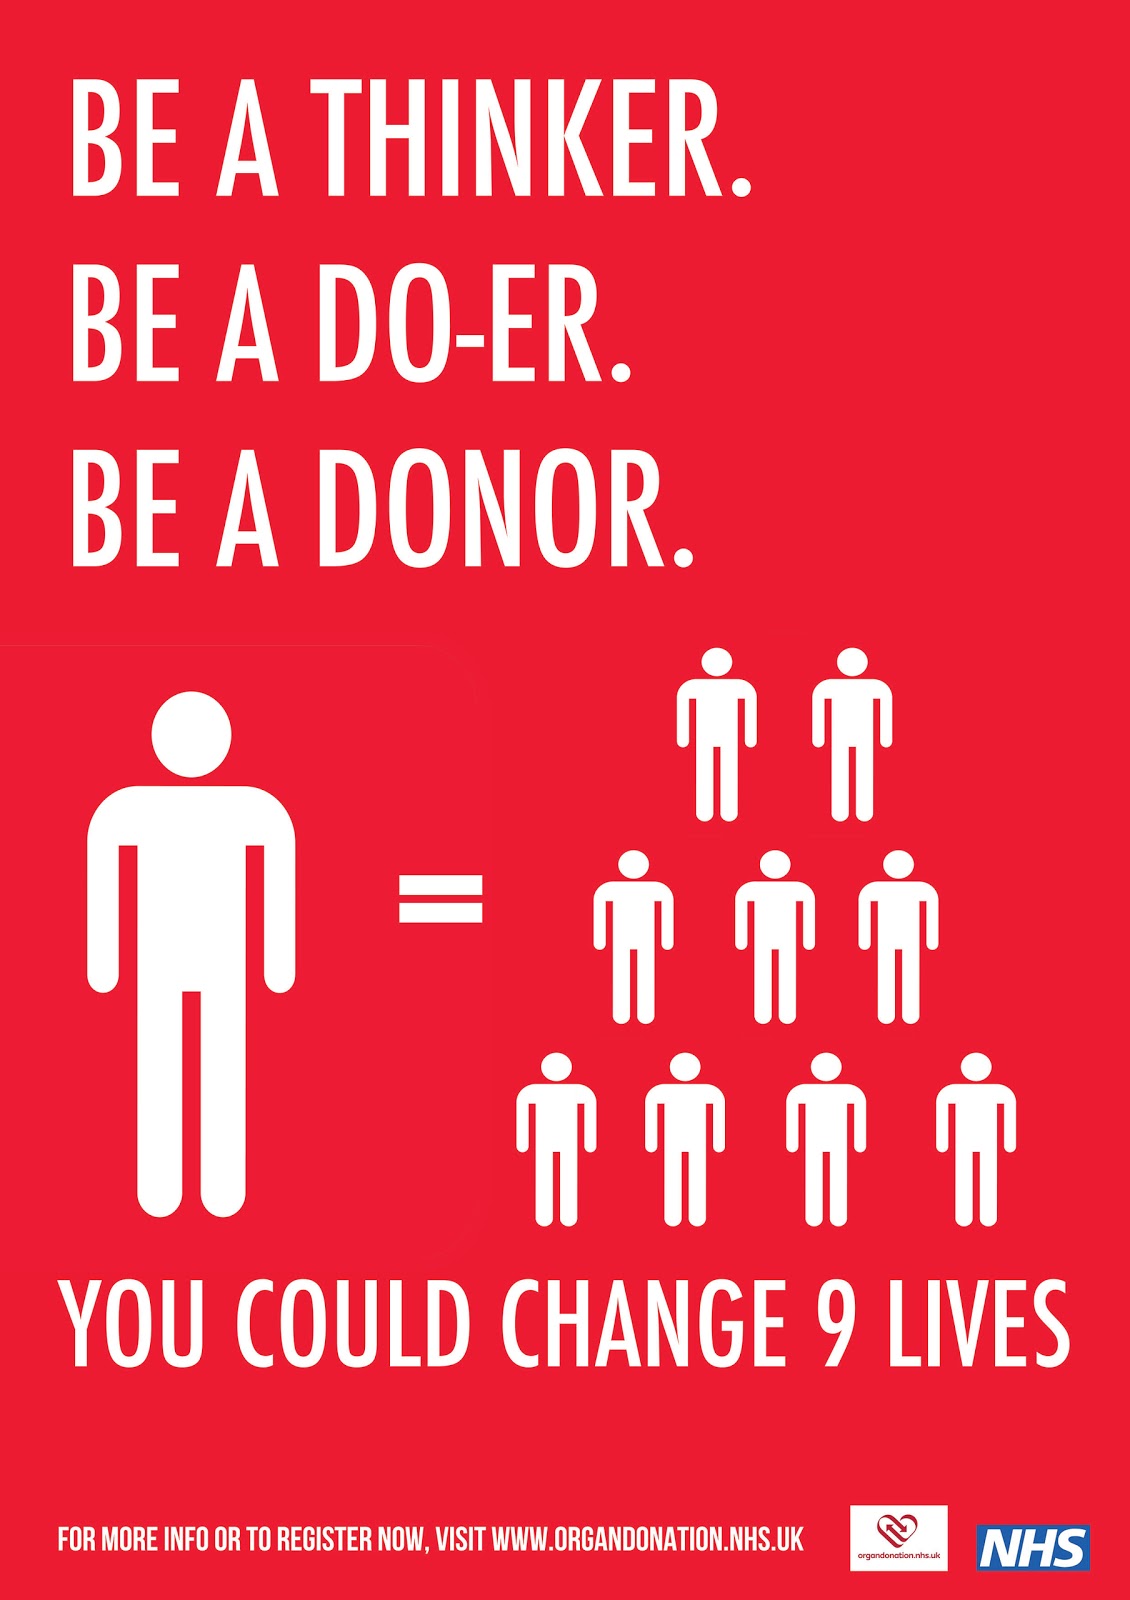 Download Organ donation poster design images